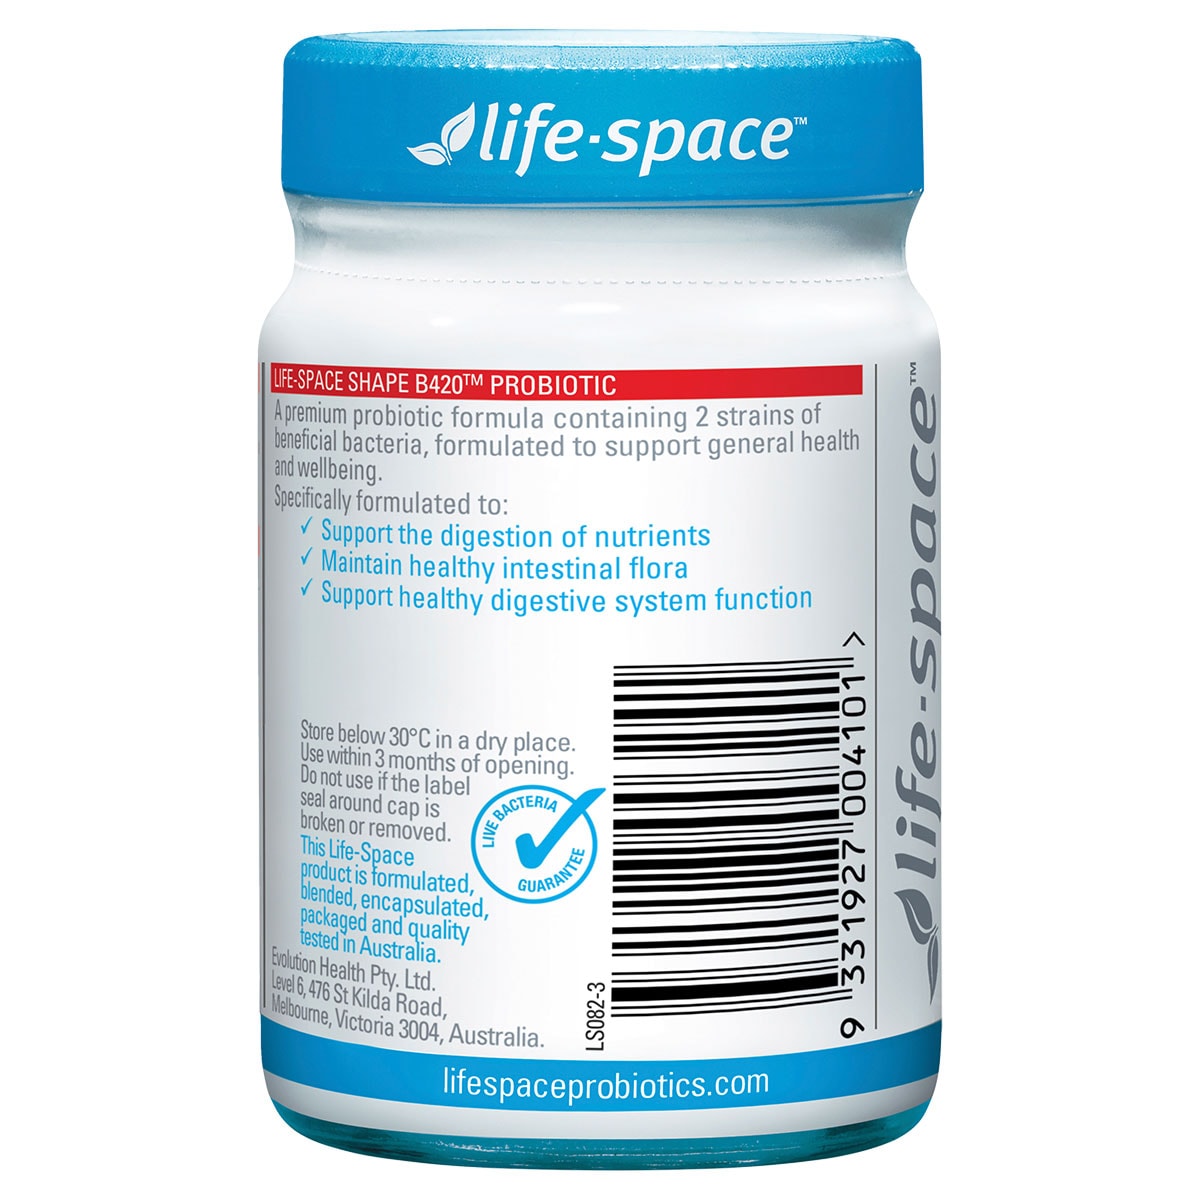 Life-Space Shape B420 Probiotic 60 Capsules